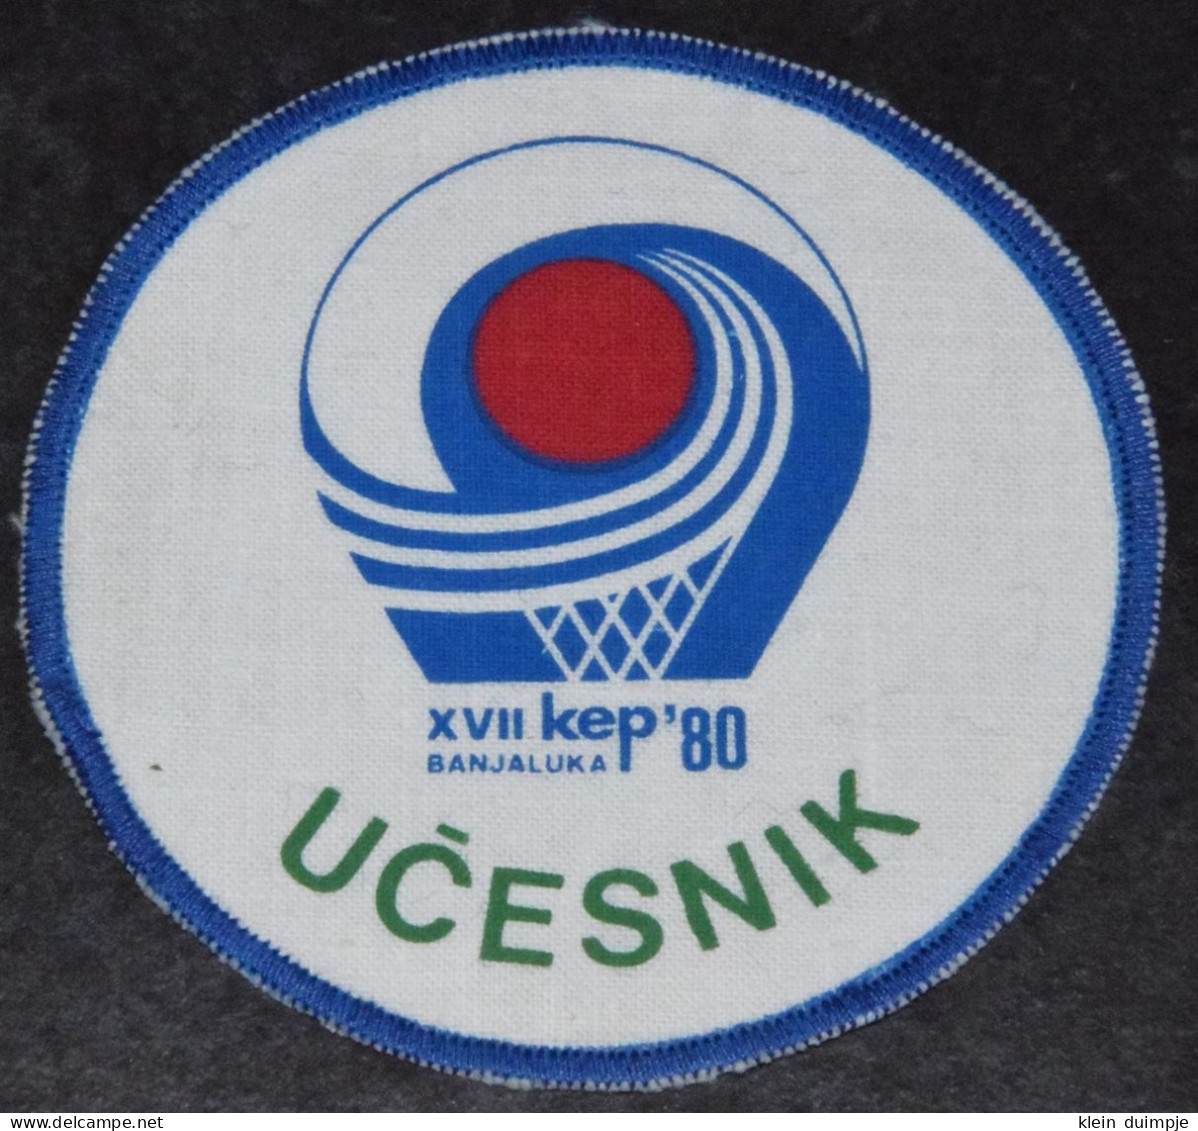 Patch Badge XVII Kep '80 Banjaluka. Ucesnik. Basketball - Apparel, Souvenirs & Other